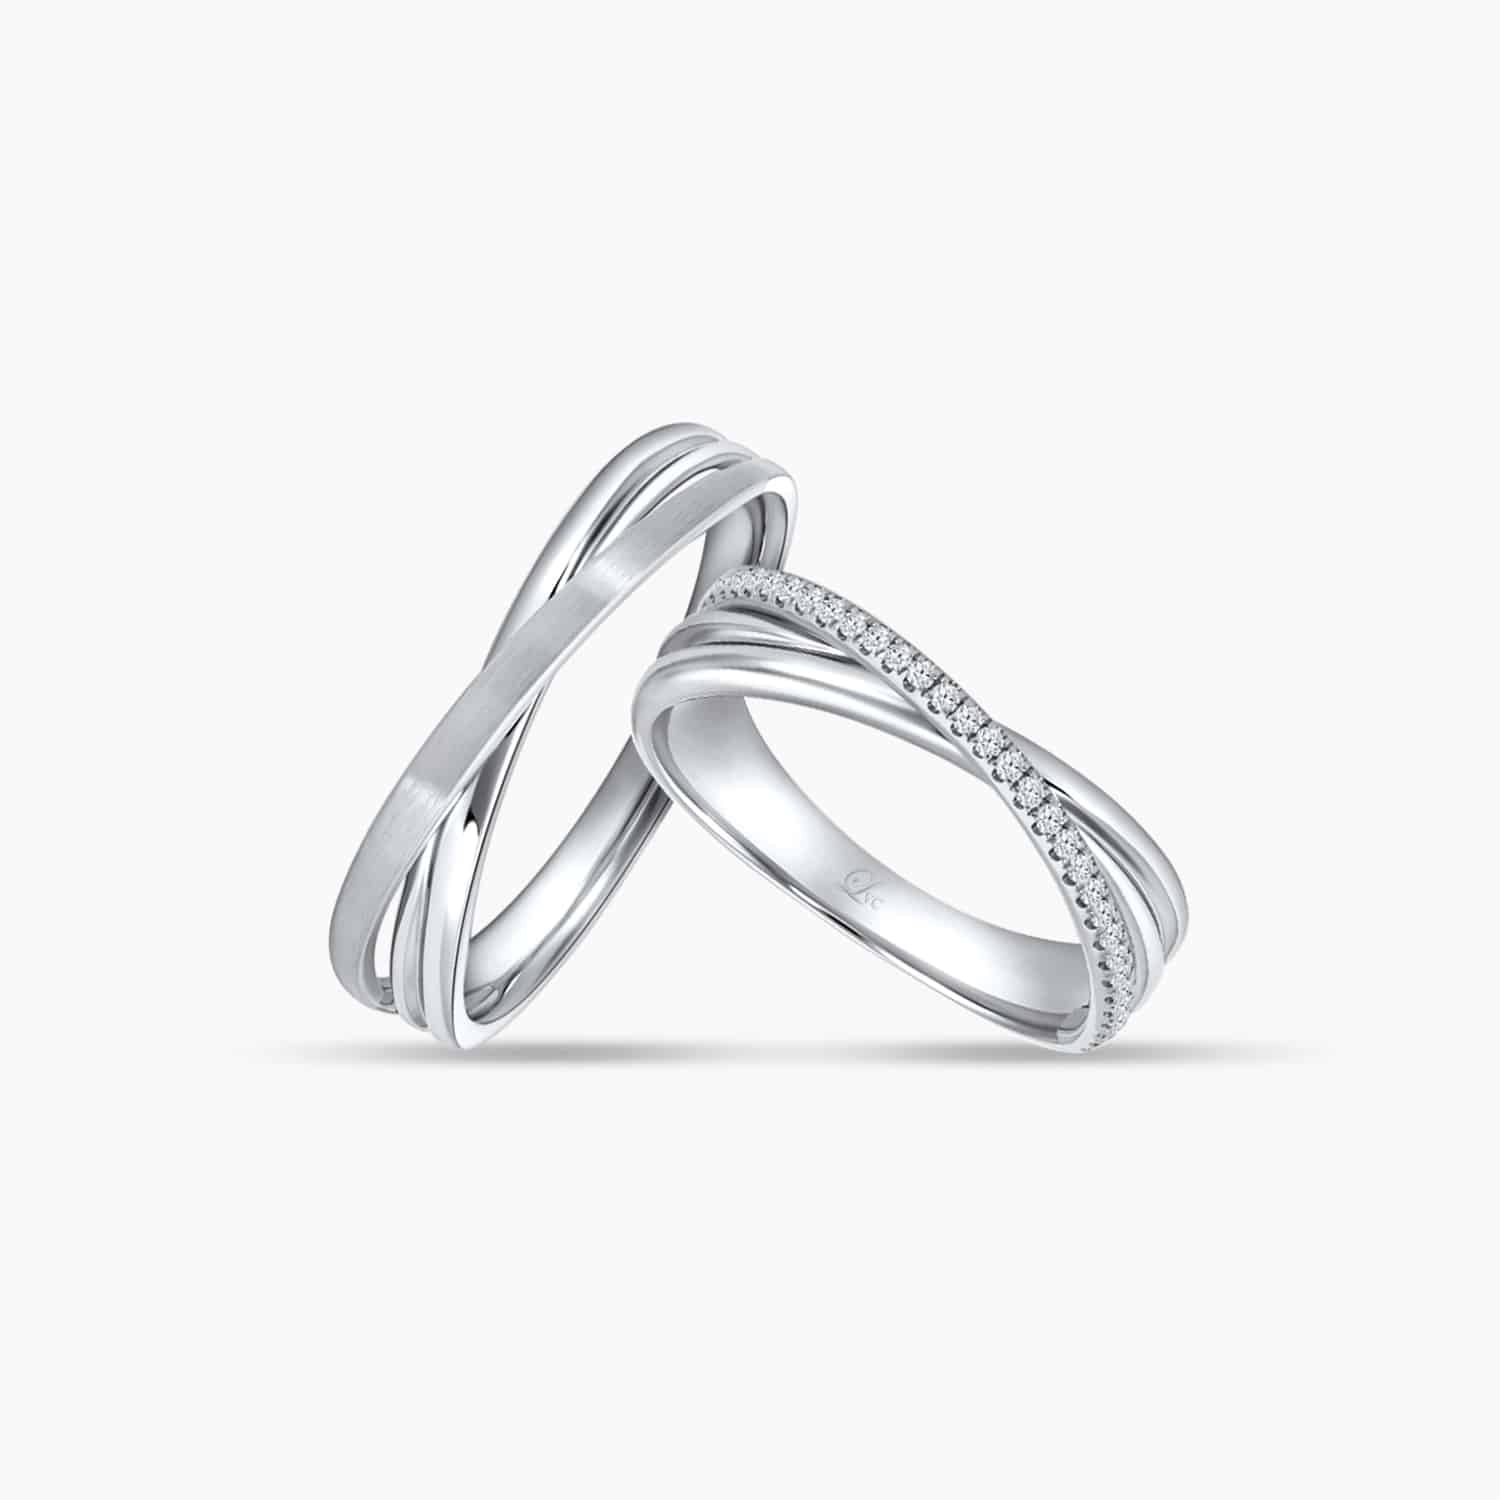 LVC Desirio Cross Wedding Ring Set in White Gold with Brilliant Diamonds on a White Gold Band